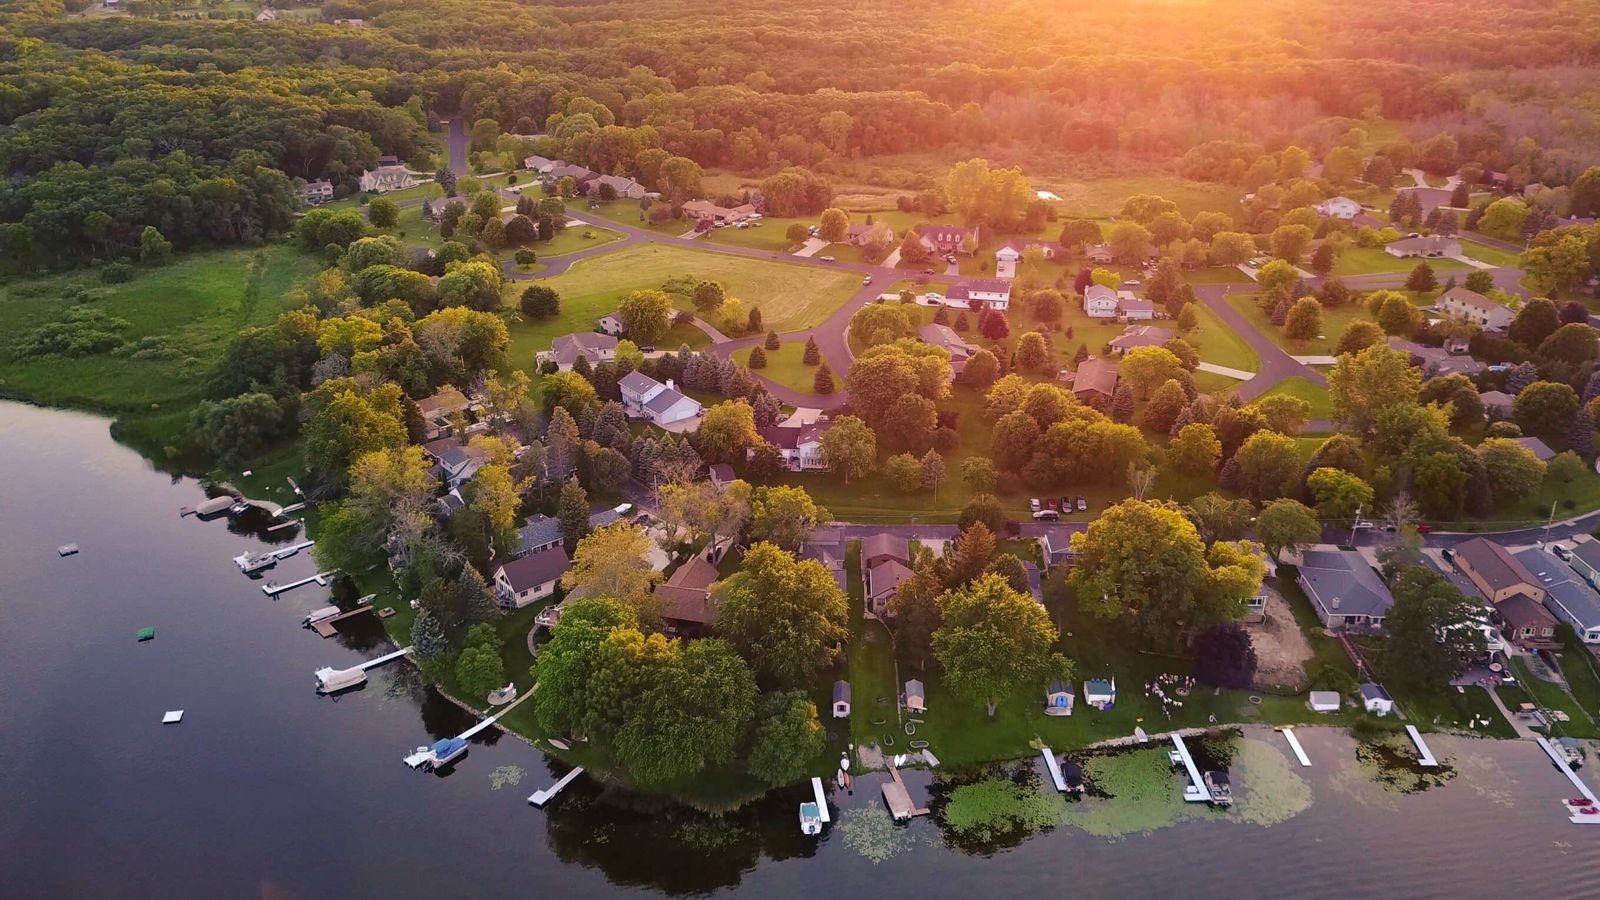 overhead view of a neighborhood on a lake